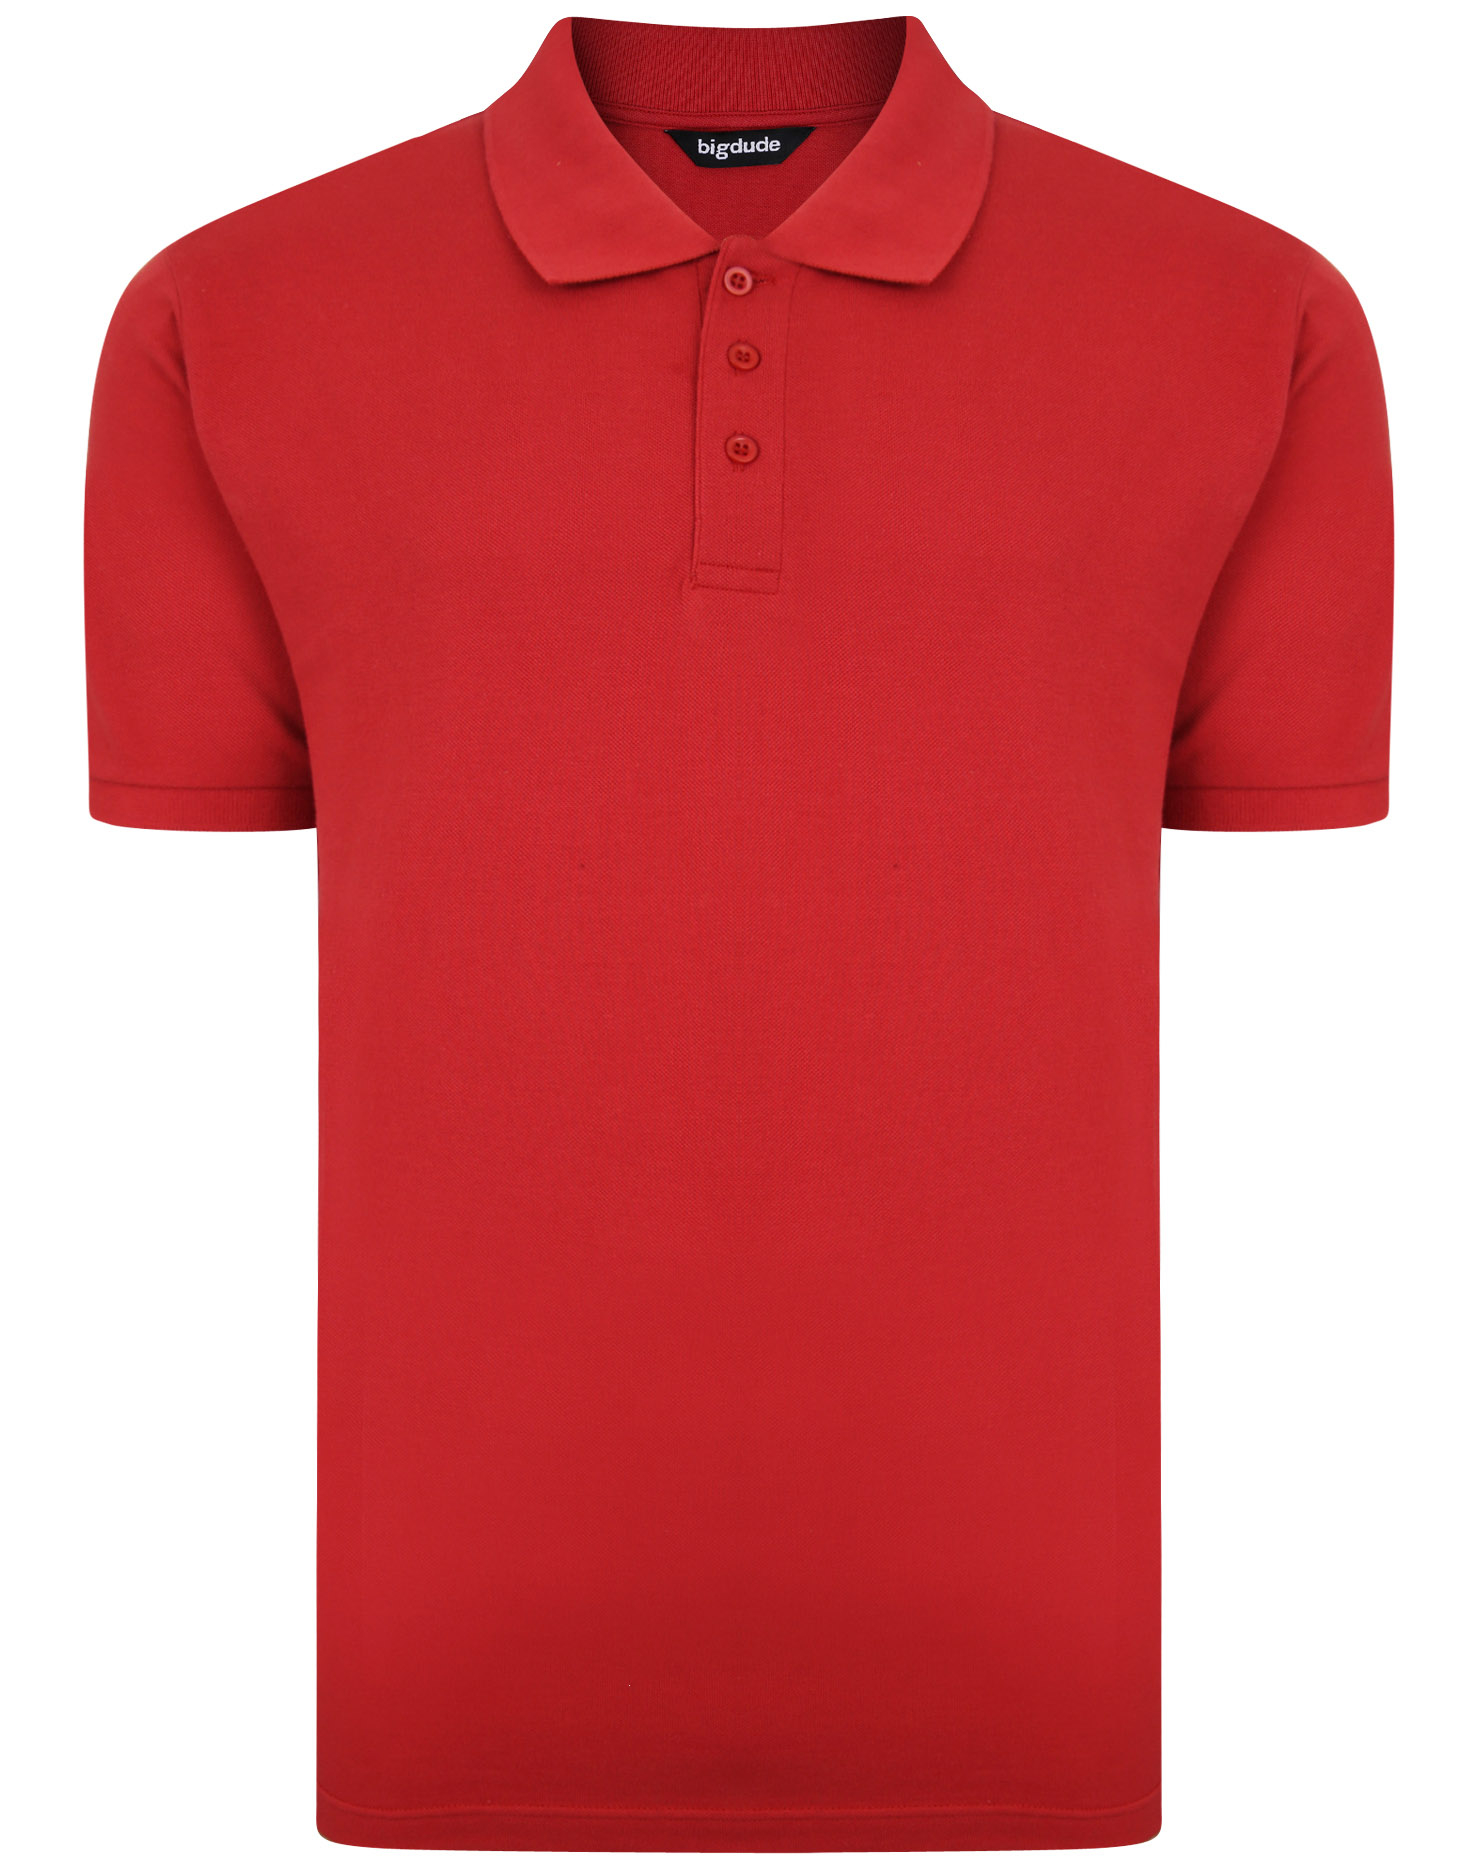 PADDOCKS Polo Shirt Poloshirt Kurzarm Gr 5XL 62  Rot Washer 